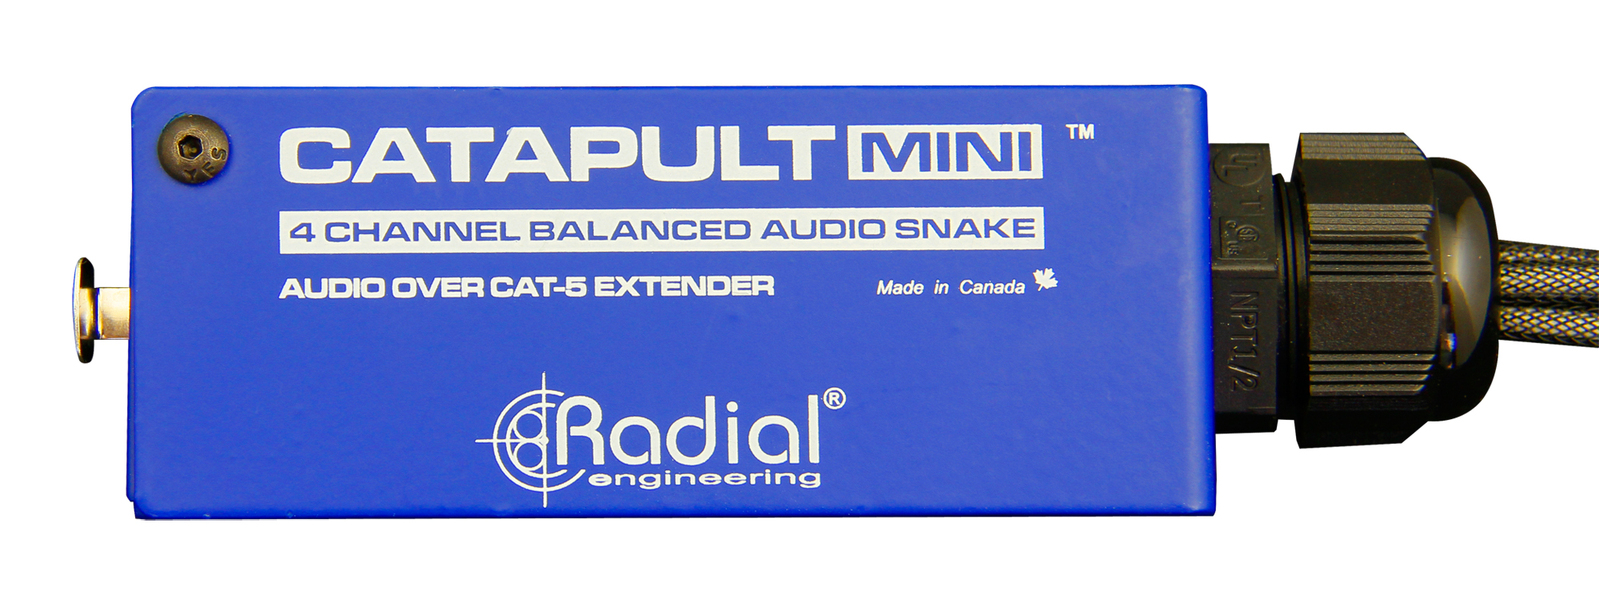 Radial Catapult Mini TX